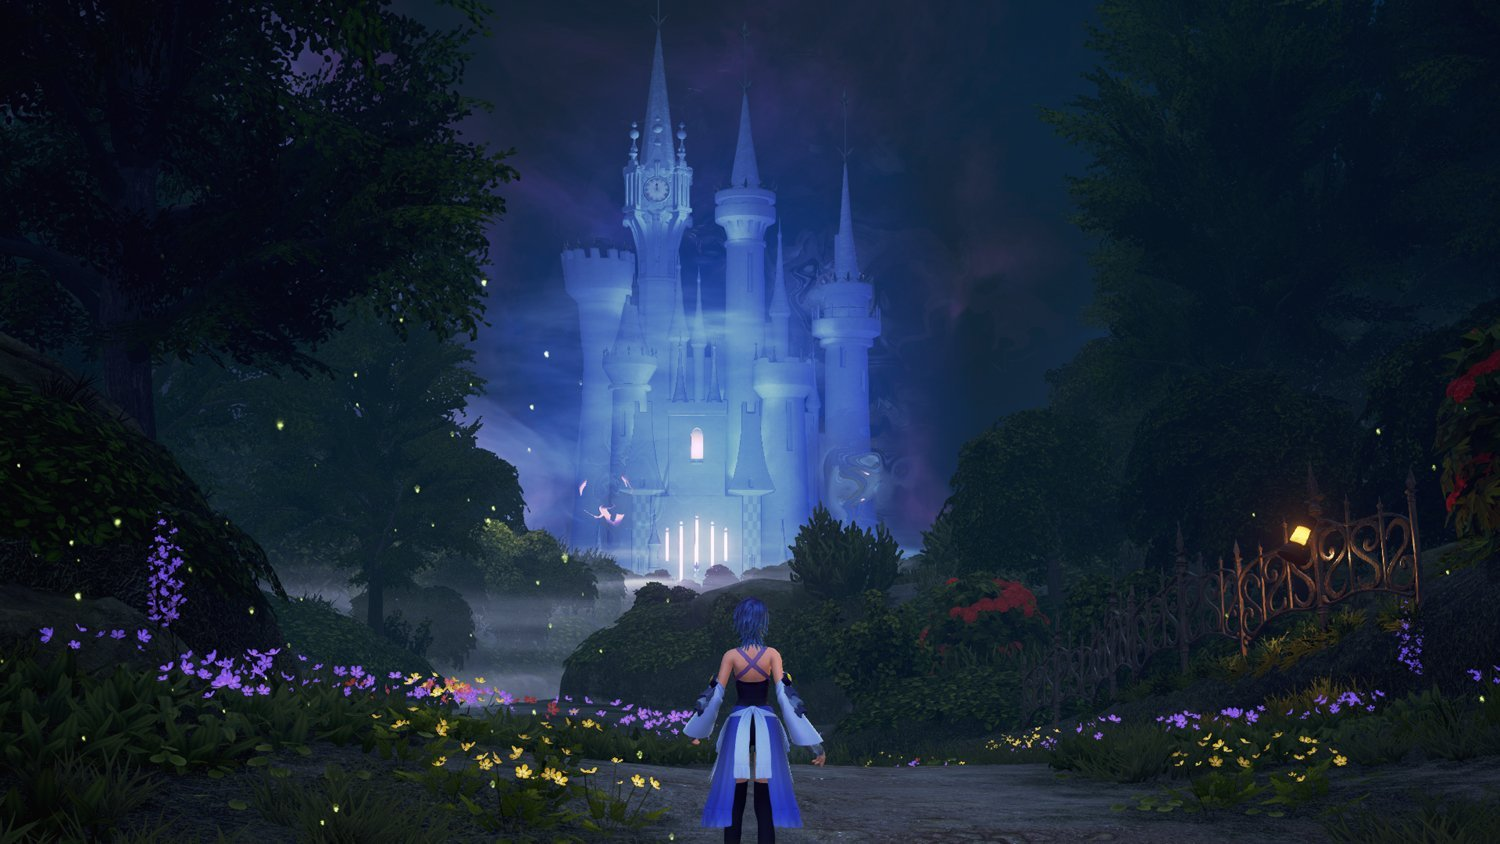 Final Kingdom Prologue HD Chapter - 4] [PlayStation 2.8 - Disney Hearts